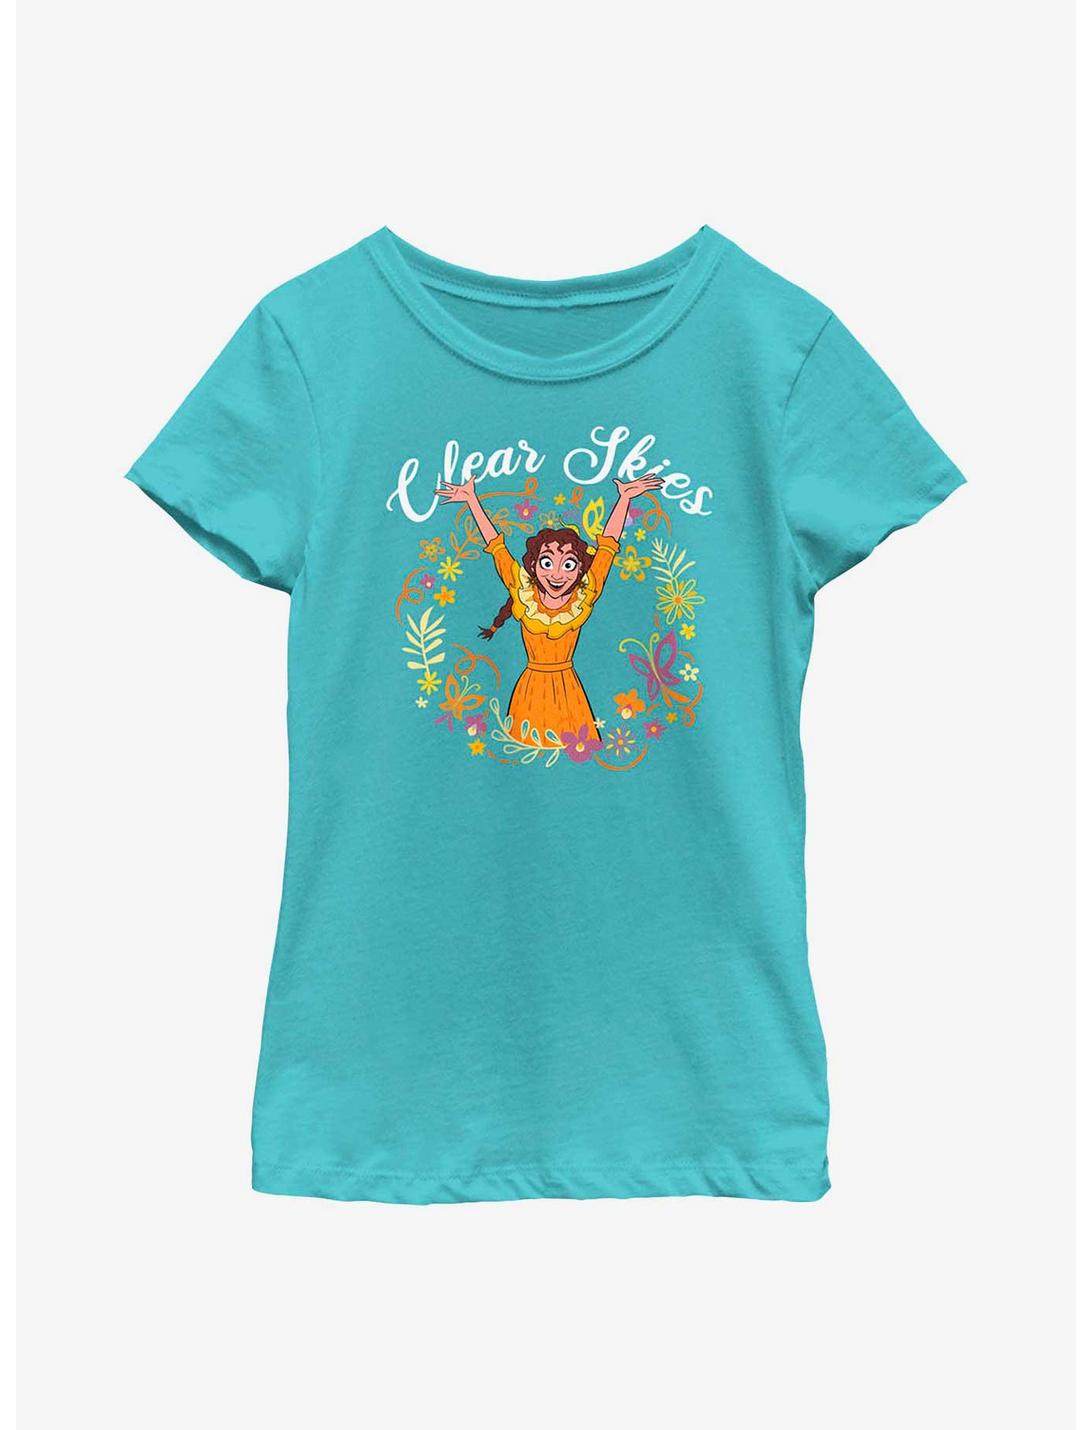 Disney Encanto Pepa Clear Skies Youth Girls T-Shirt, TAHI BLUE, hi-res